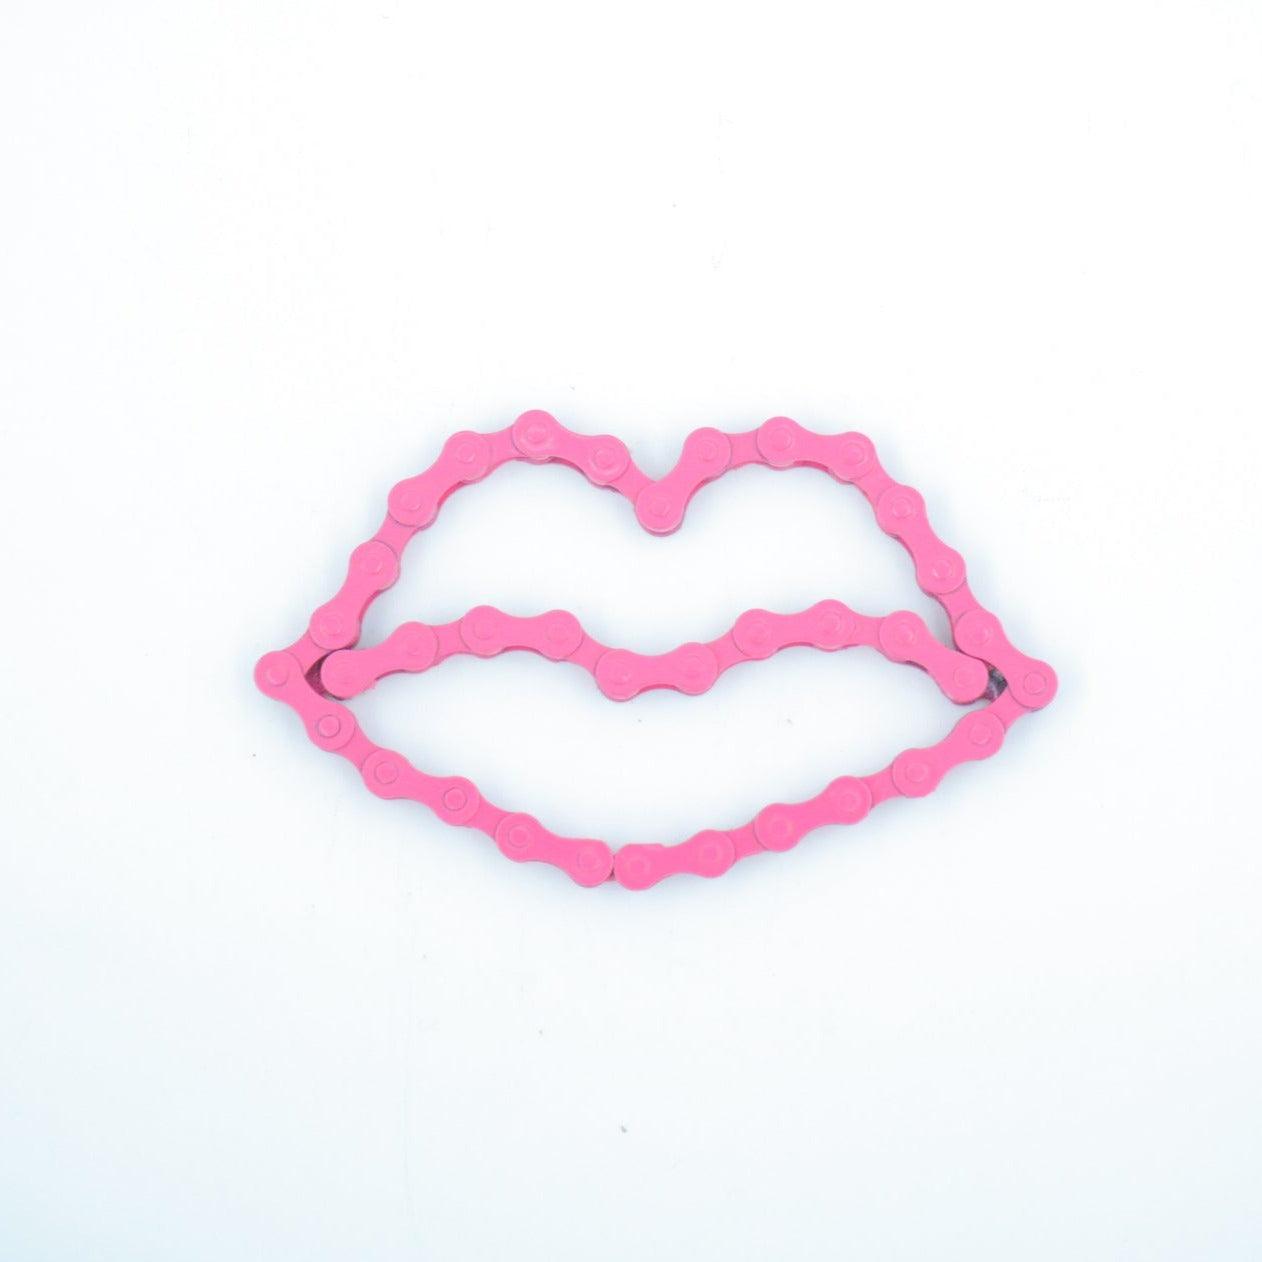 Lips Sculpture | UNCHAINED by NIRIT LEVAV PACKER